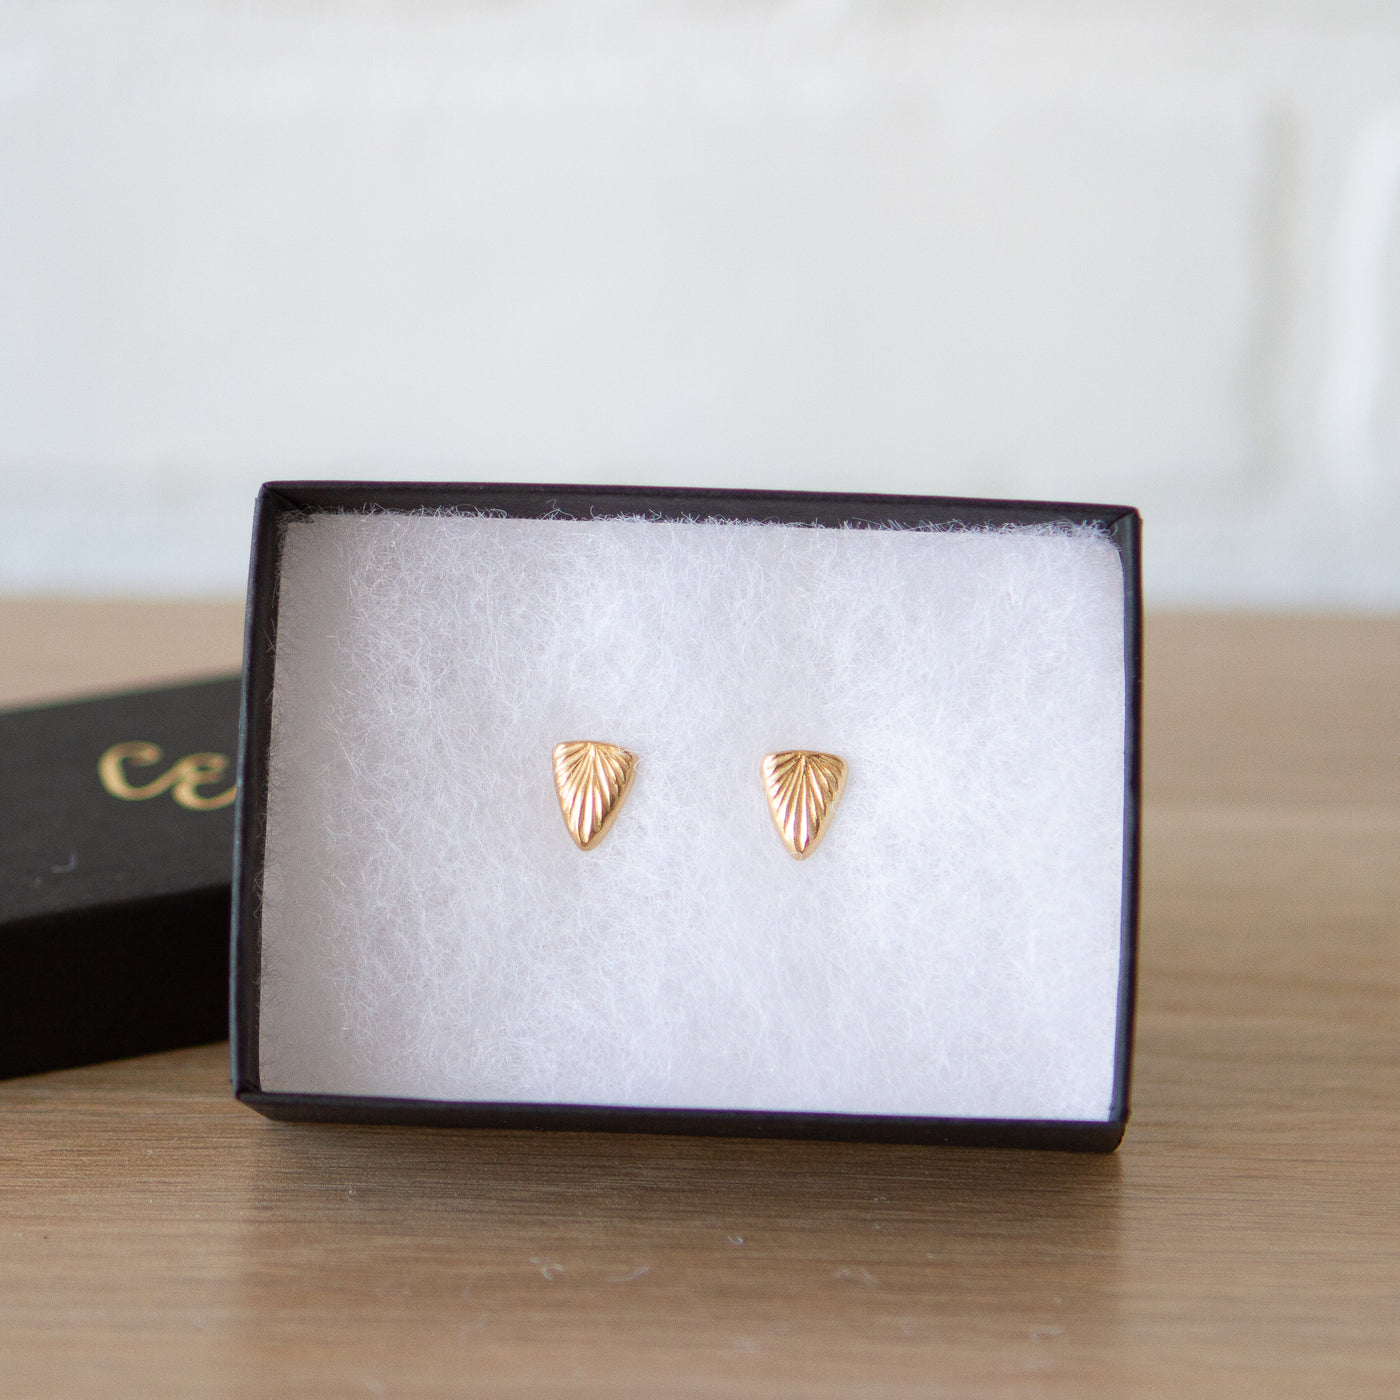 Triangle sunburst stud earrings in gold vermeil in a gift box